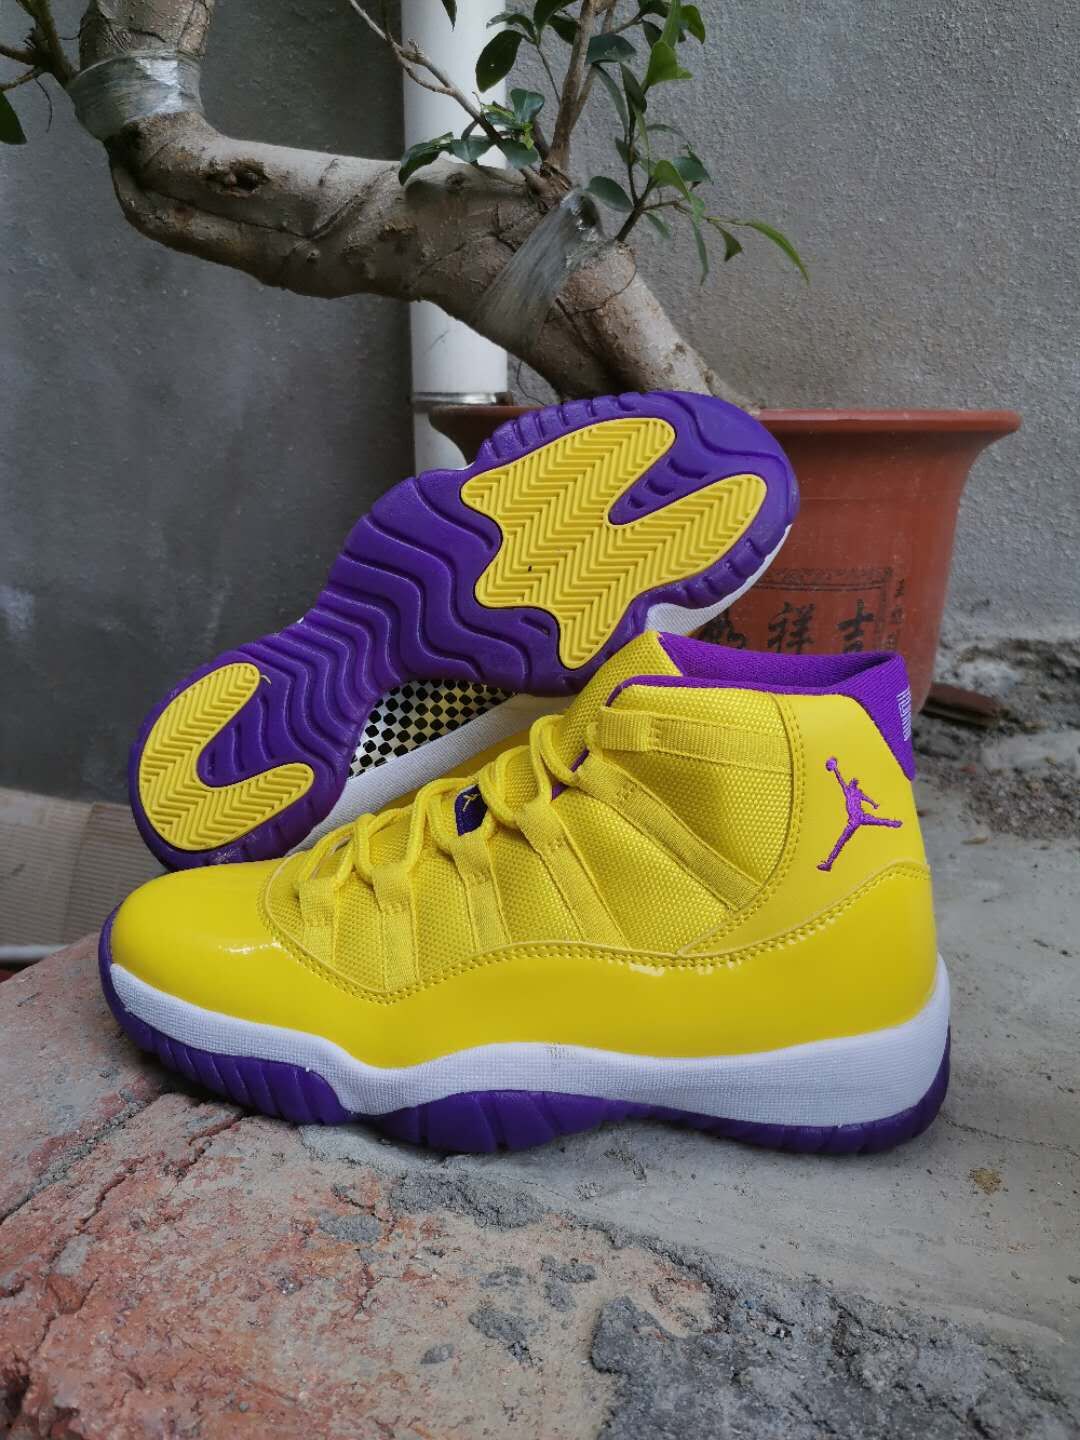 2020 Air Jordan 11 Kobe Yellow Purple Shoes